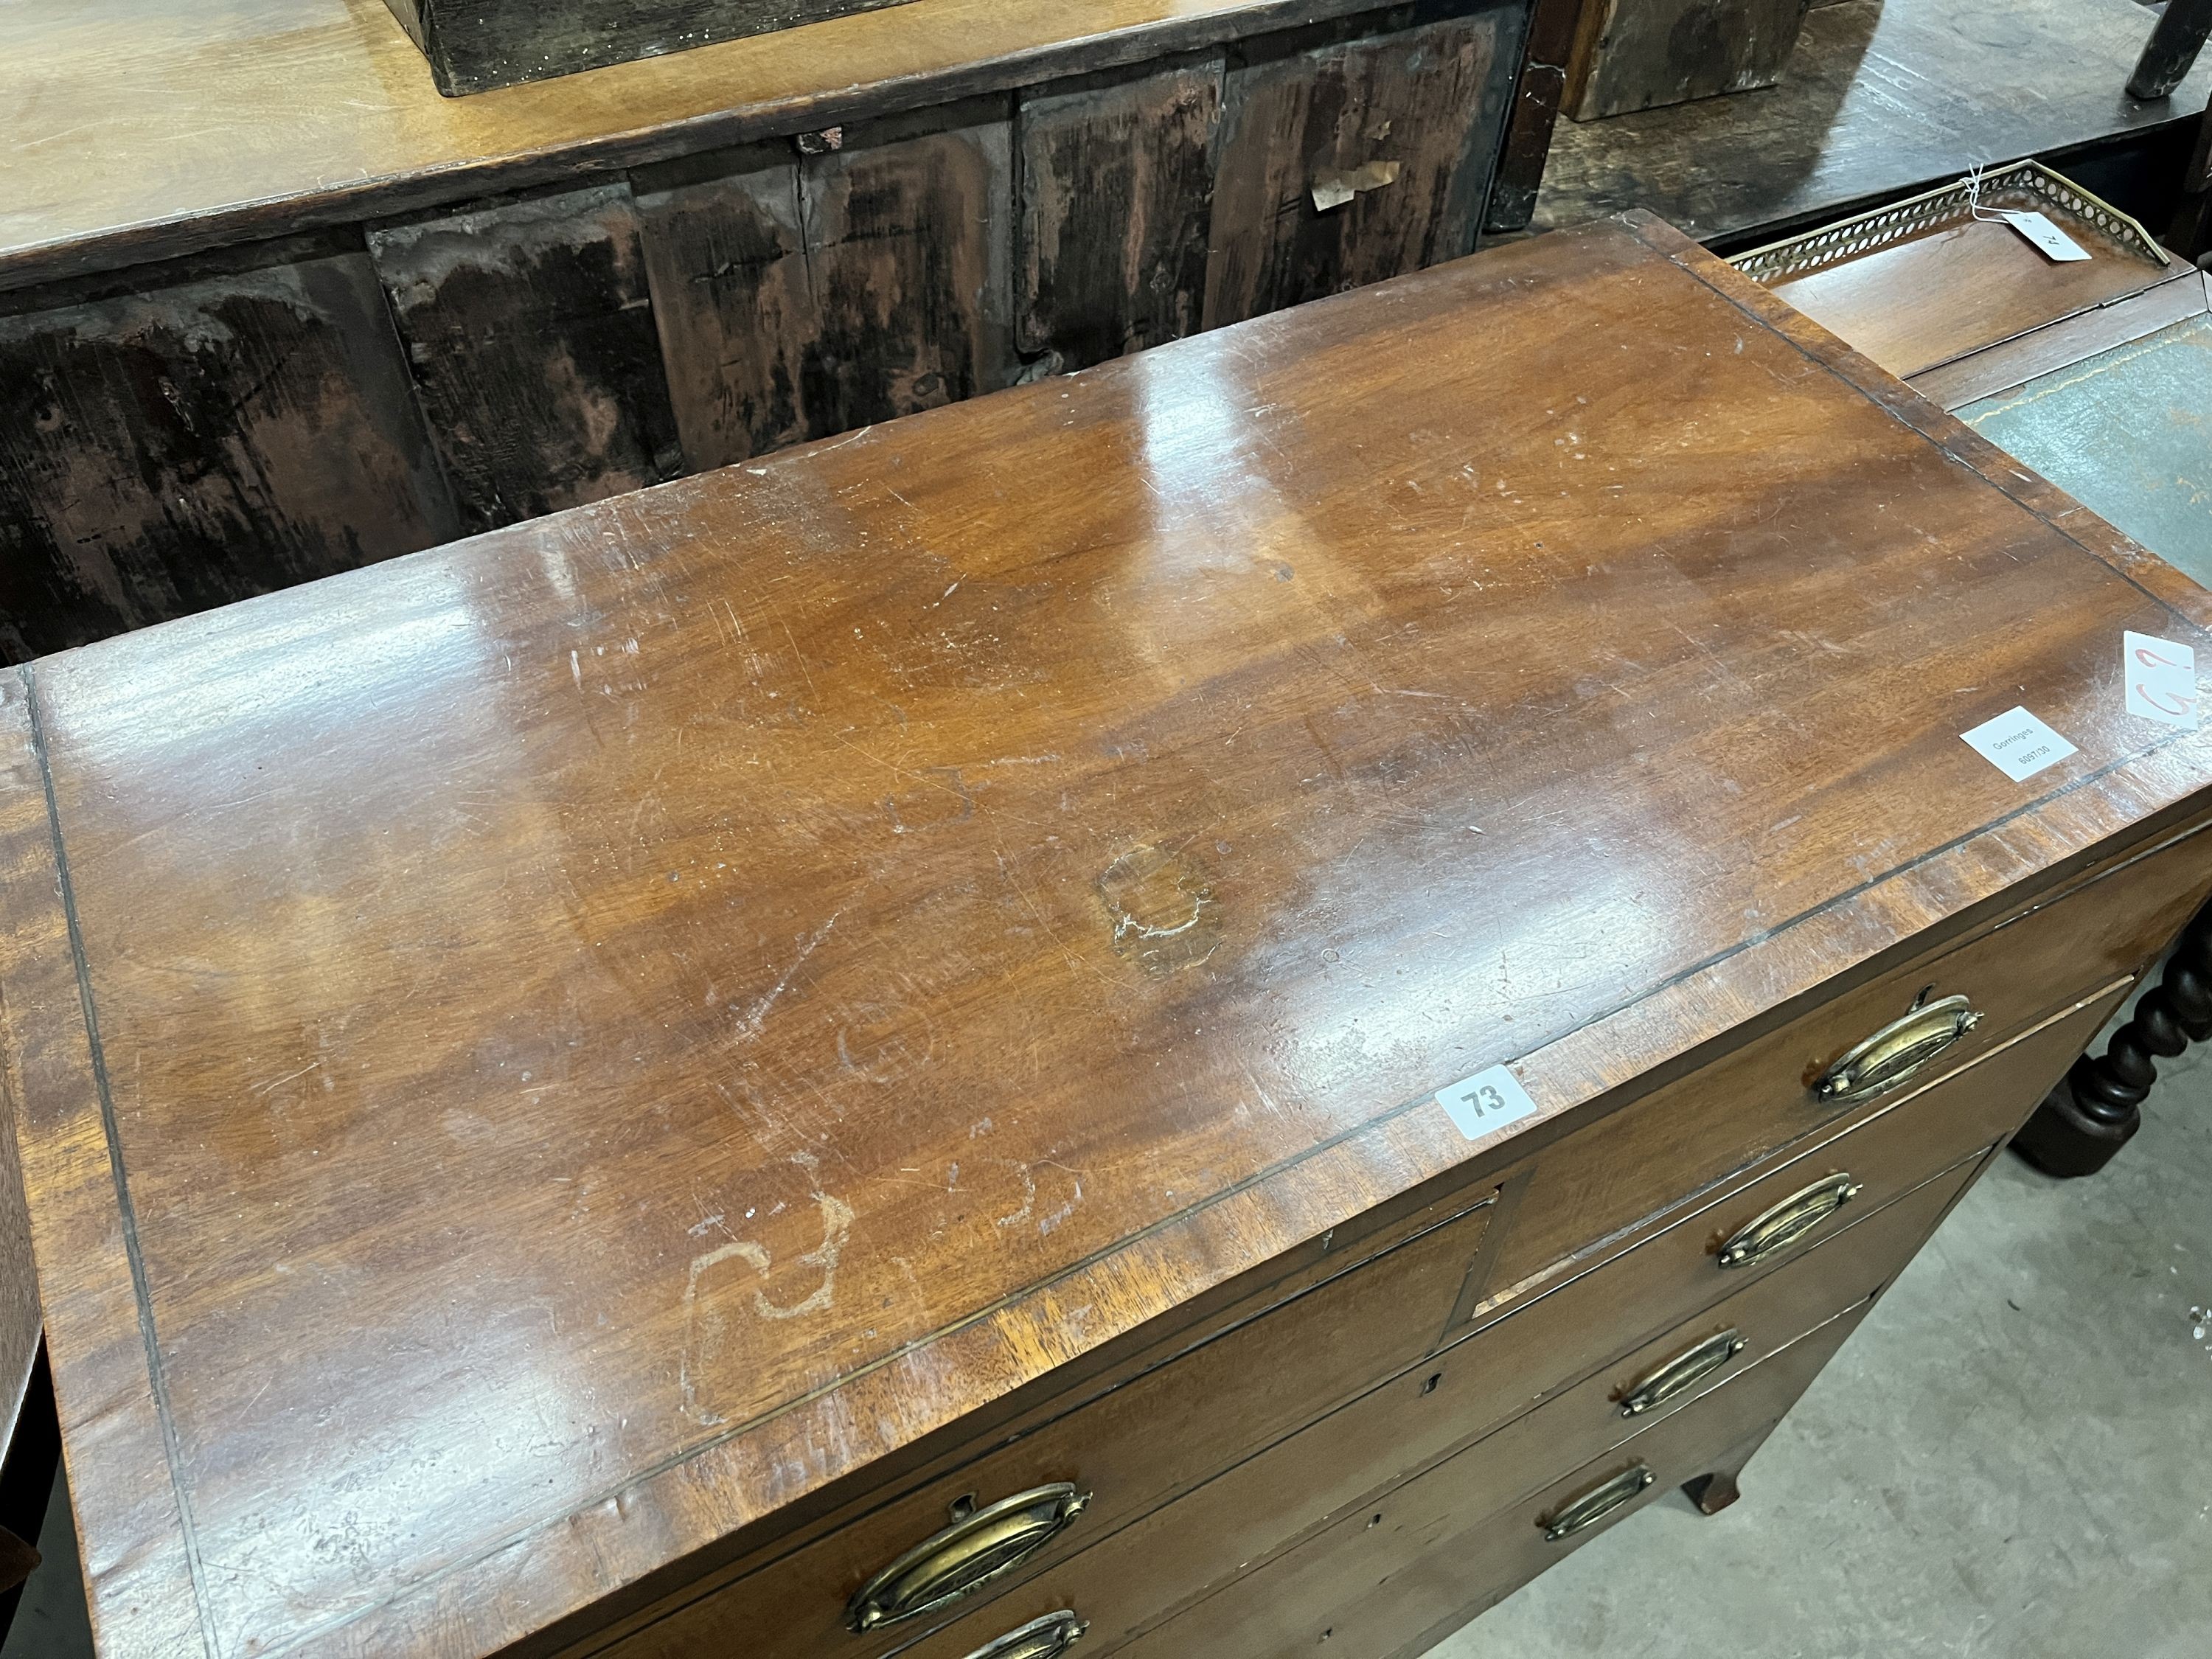 A Regency mahogany five drawer chest, width 96cm, depth 50cm, height 97cm